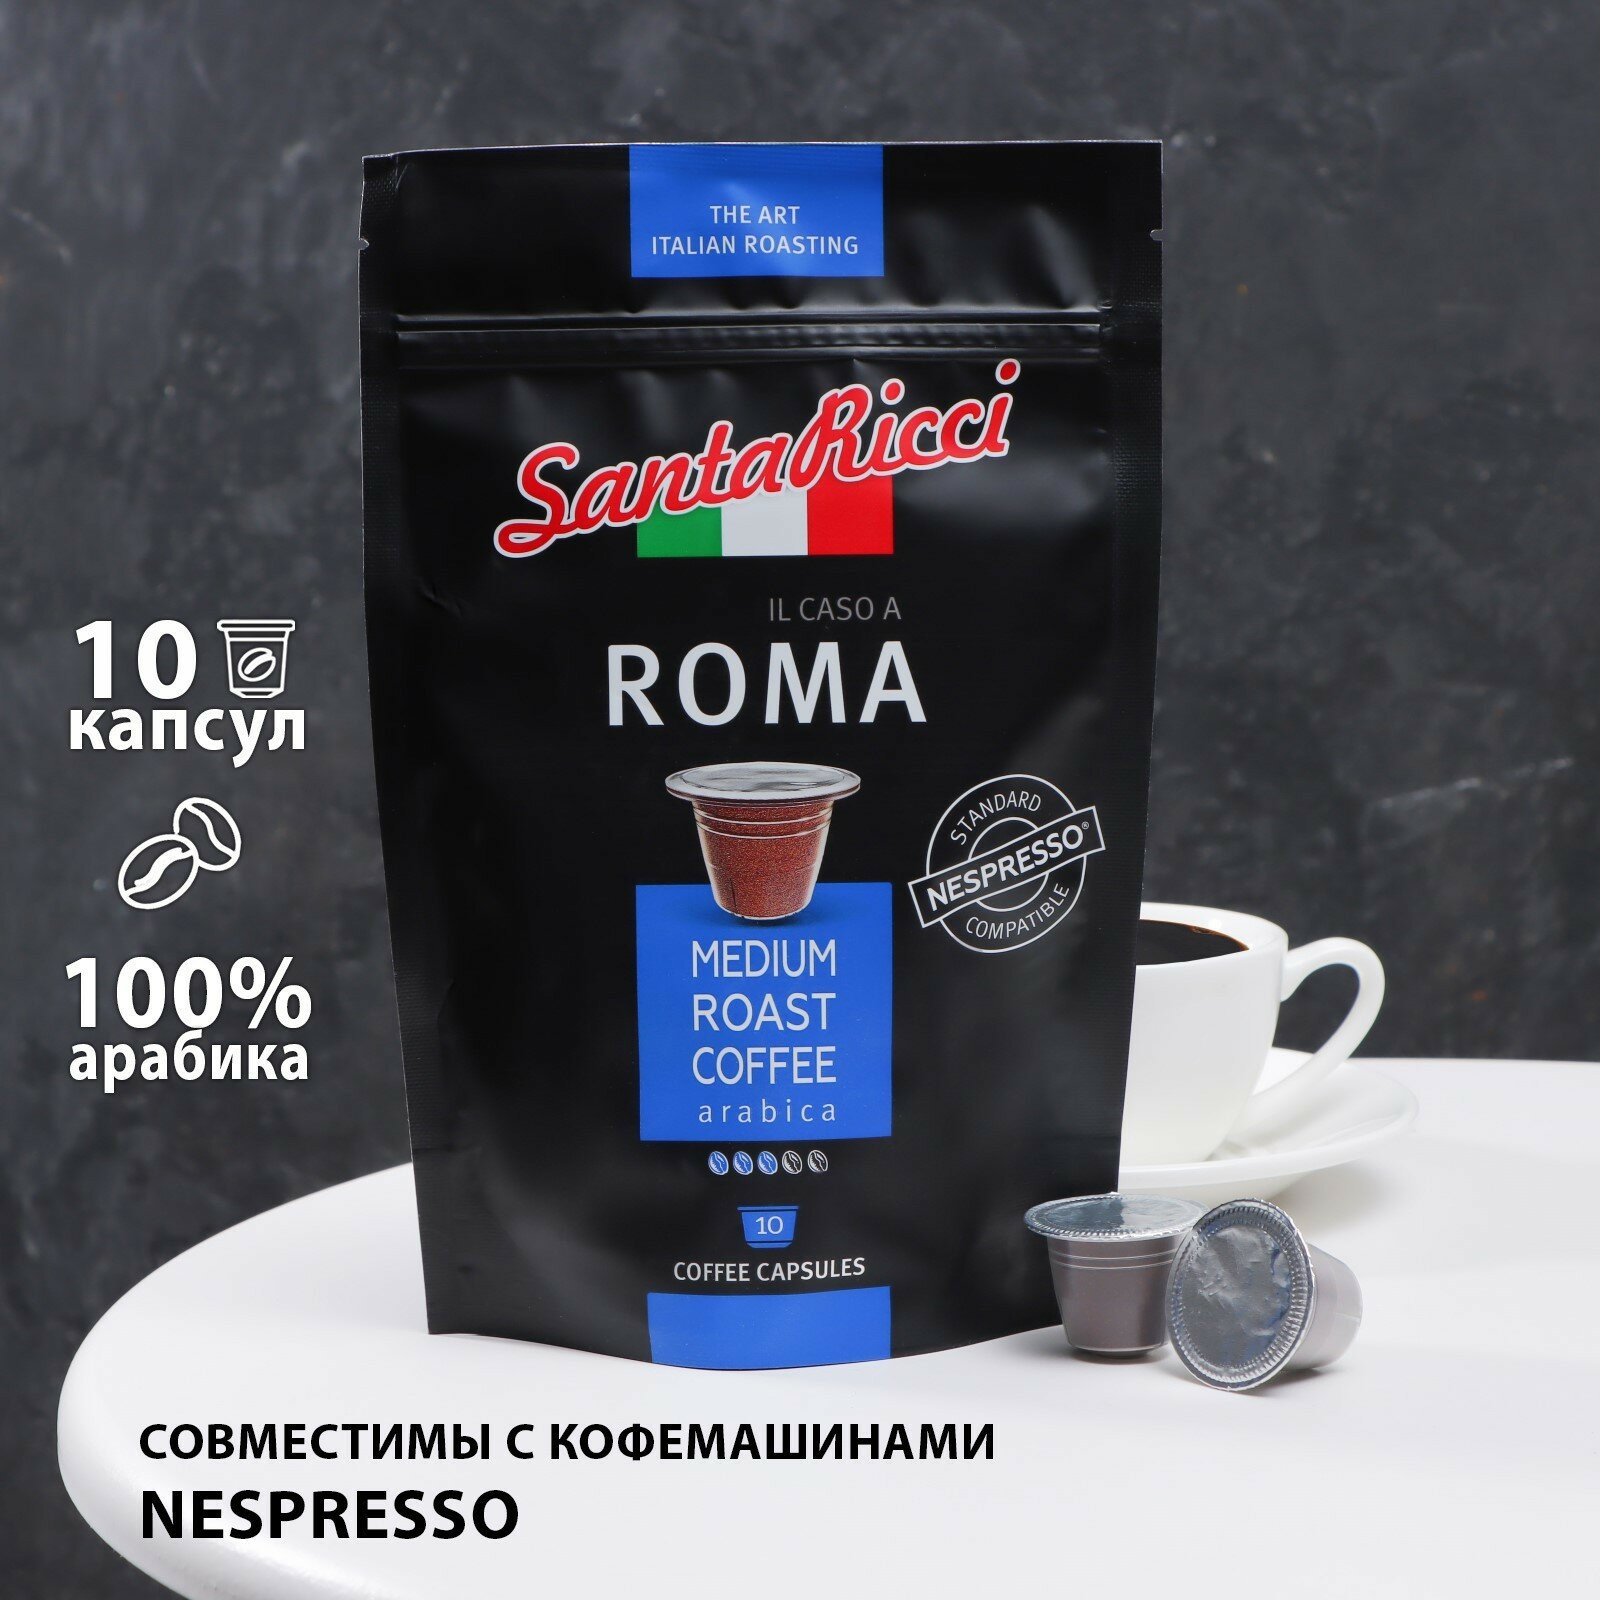 Капсулы для кофемашин SantaRicci "IL CASO A ROMA", 50 г - фотография № 1